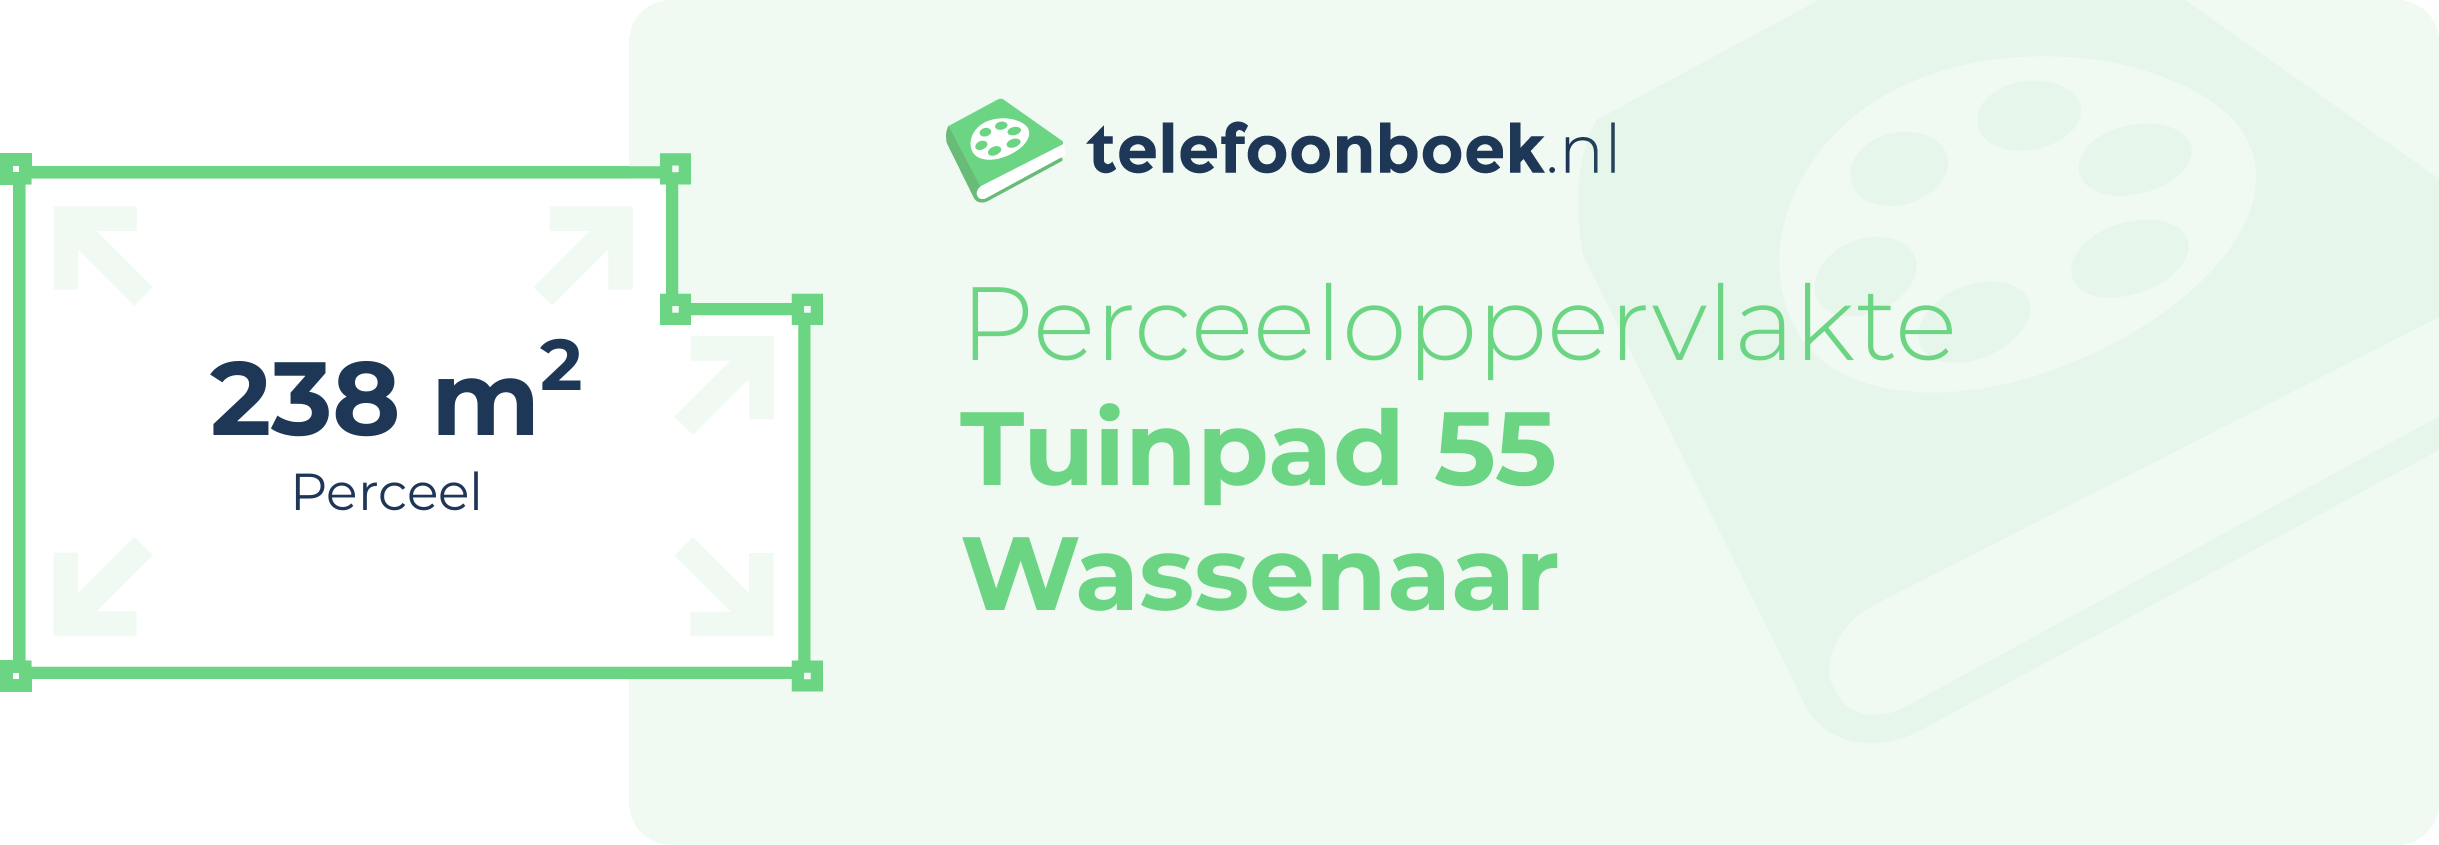 Perceeloppervlakte Tuinpad 55 Wassenaar